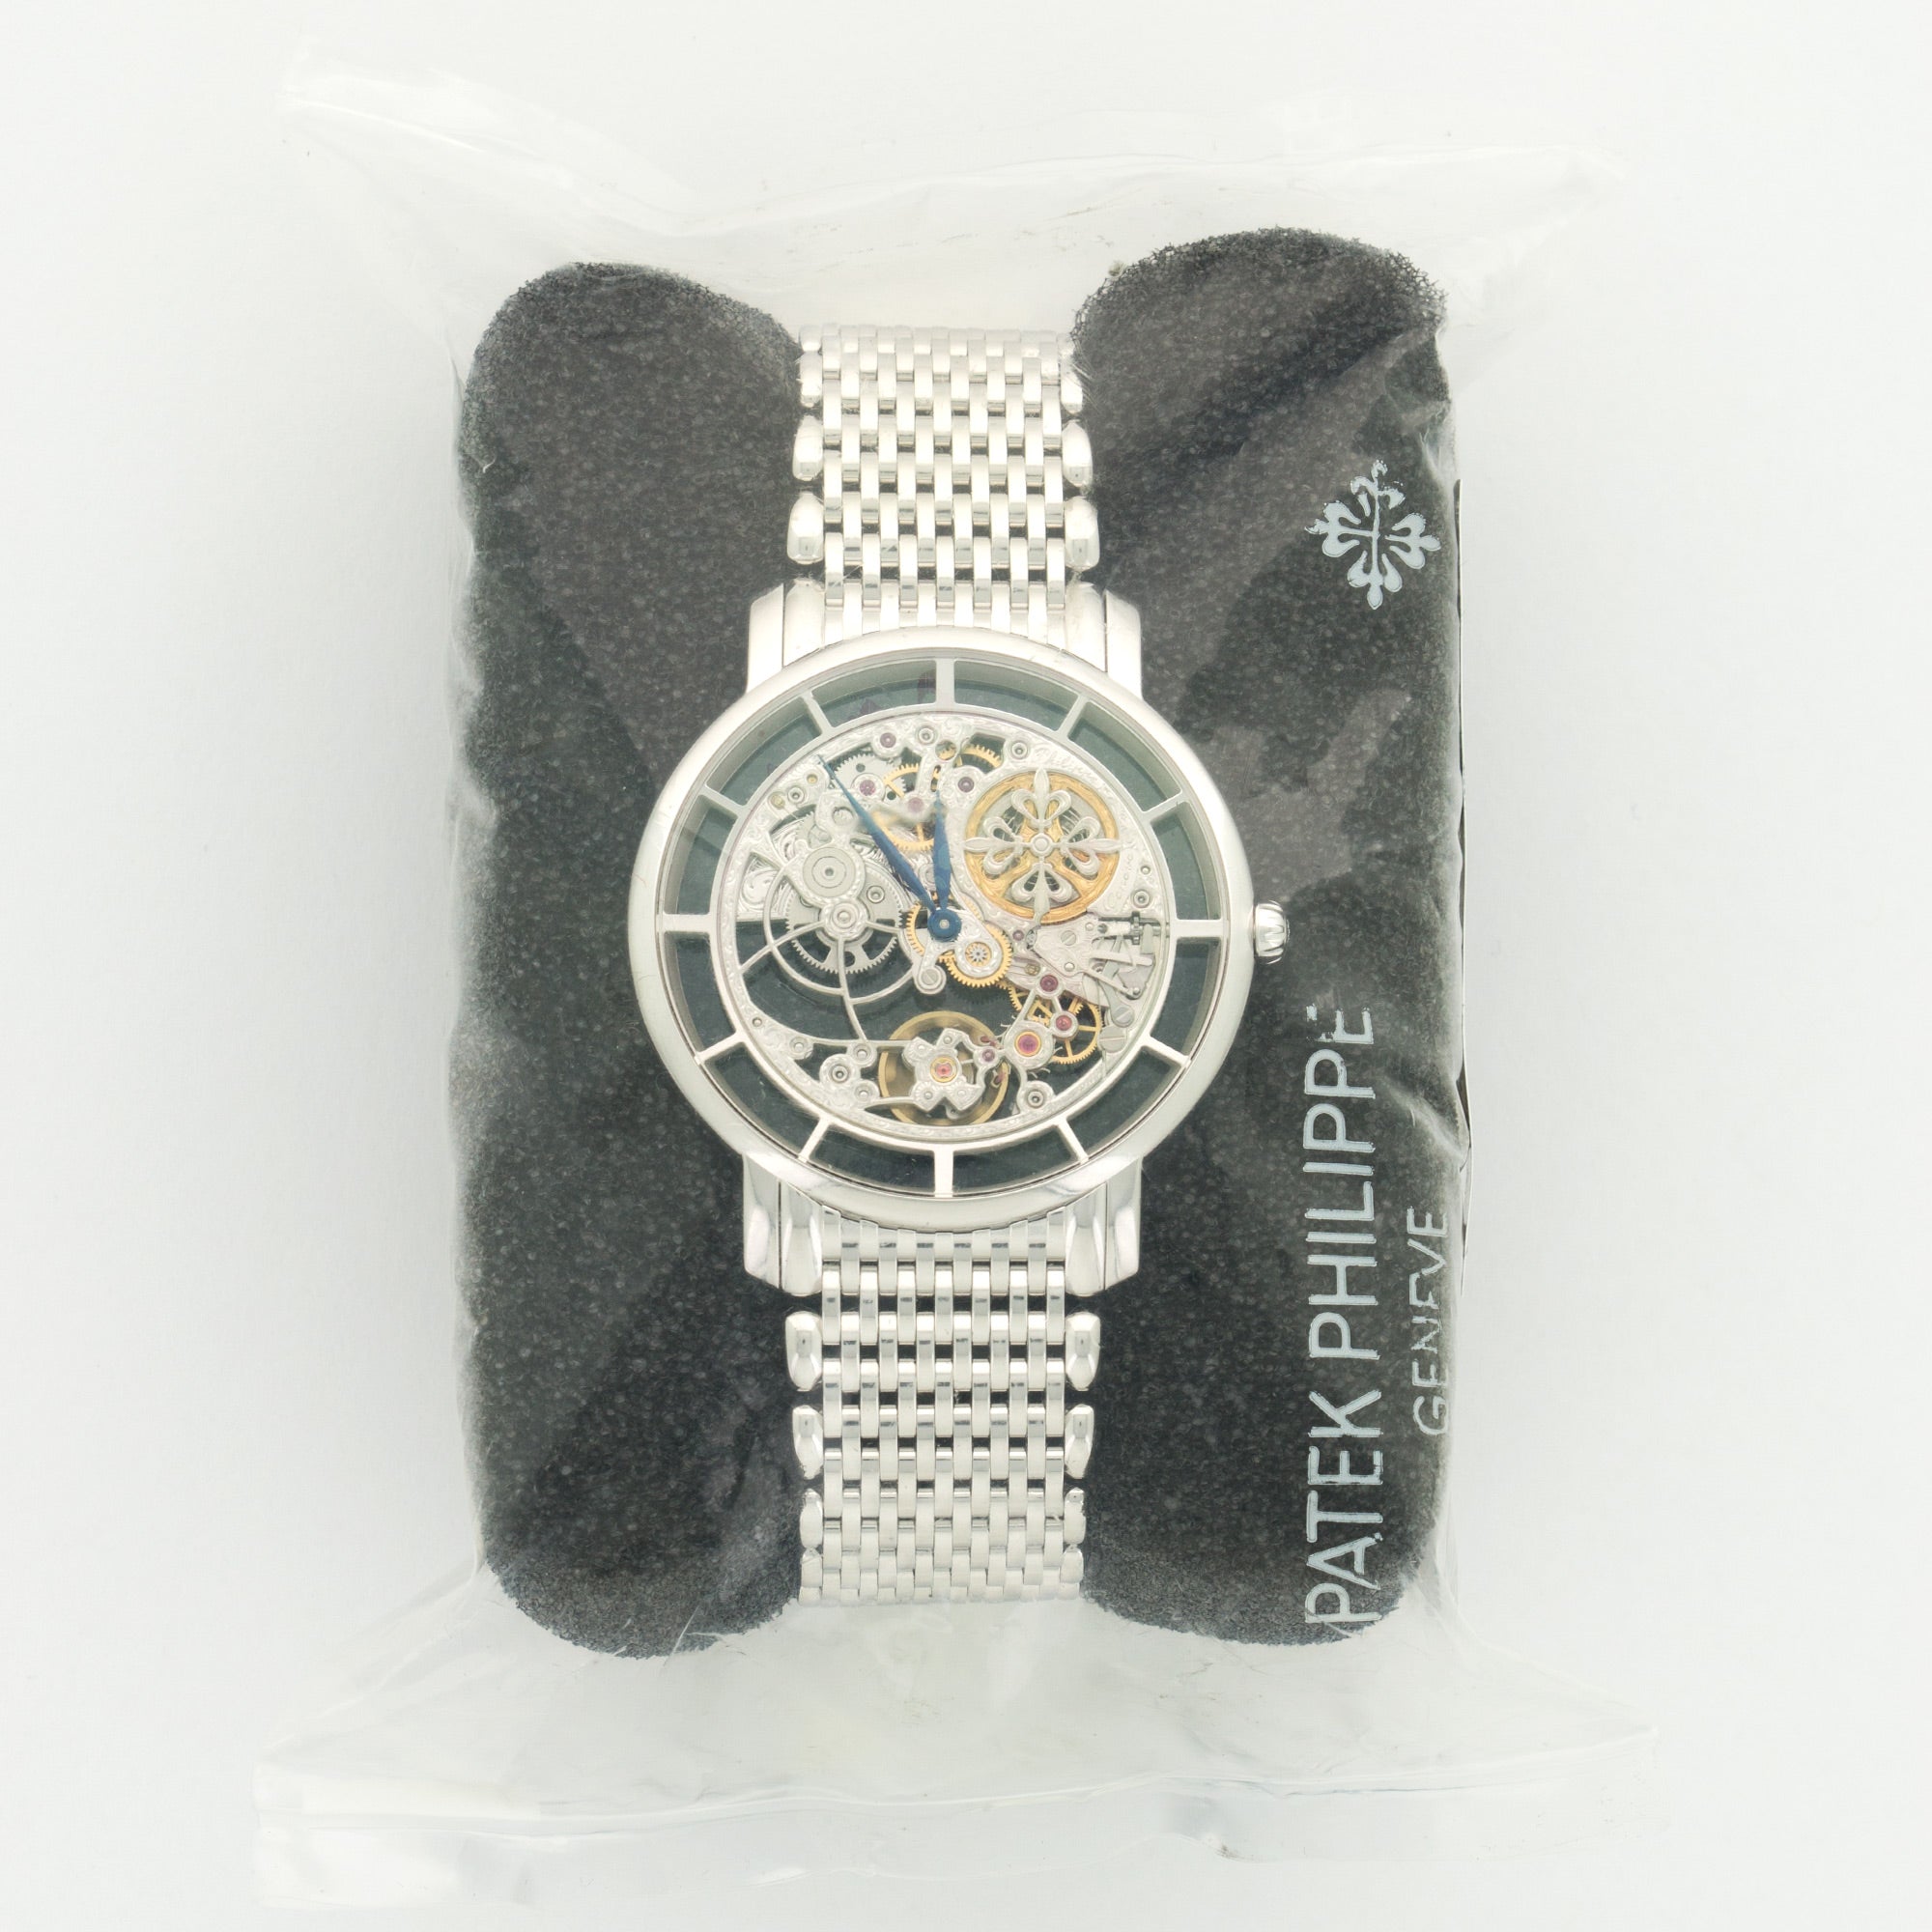 Patek Philippe - Patek Philippe White Gold Skeletonized Ultra-Thin Watch Ref. 5180 - The Keystone Watches